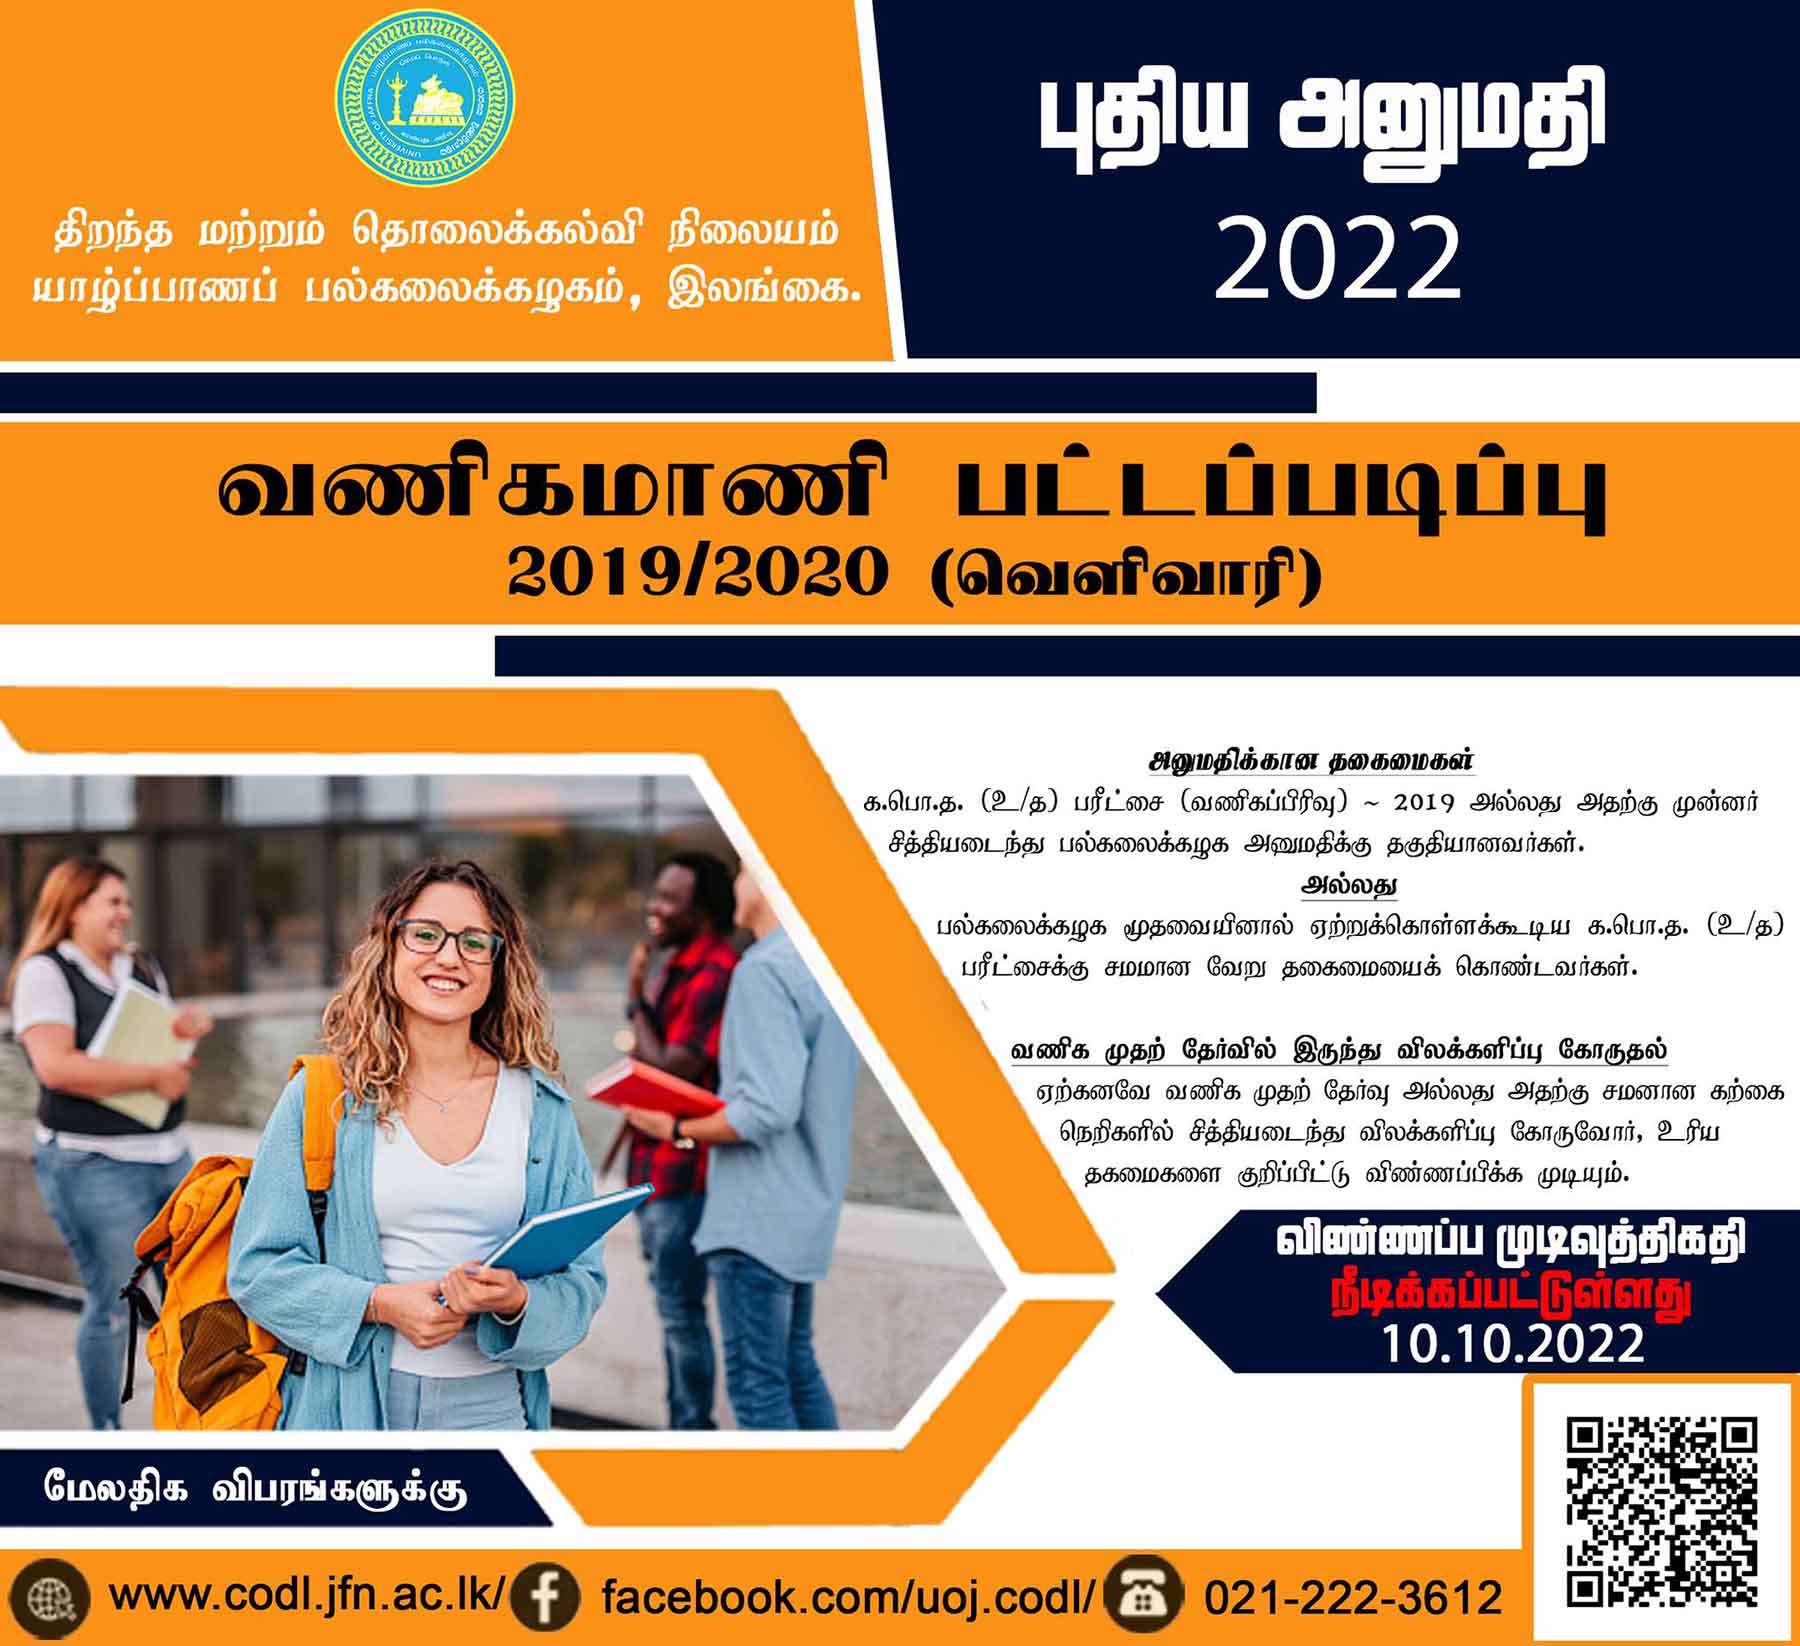 Application for Bachelor of Commerce (B.Com) (Hons) External Degree Programme (2022) - University of Jaffna